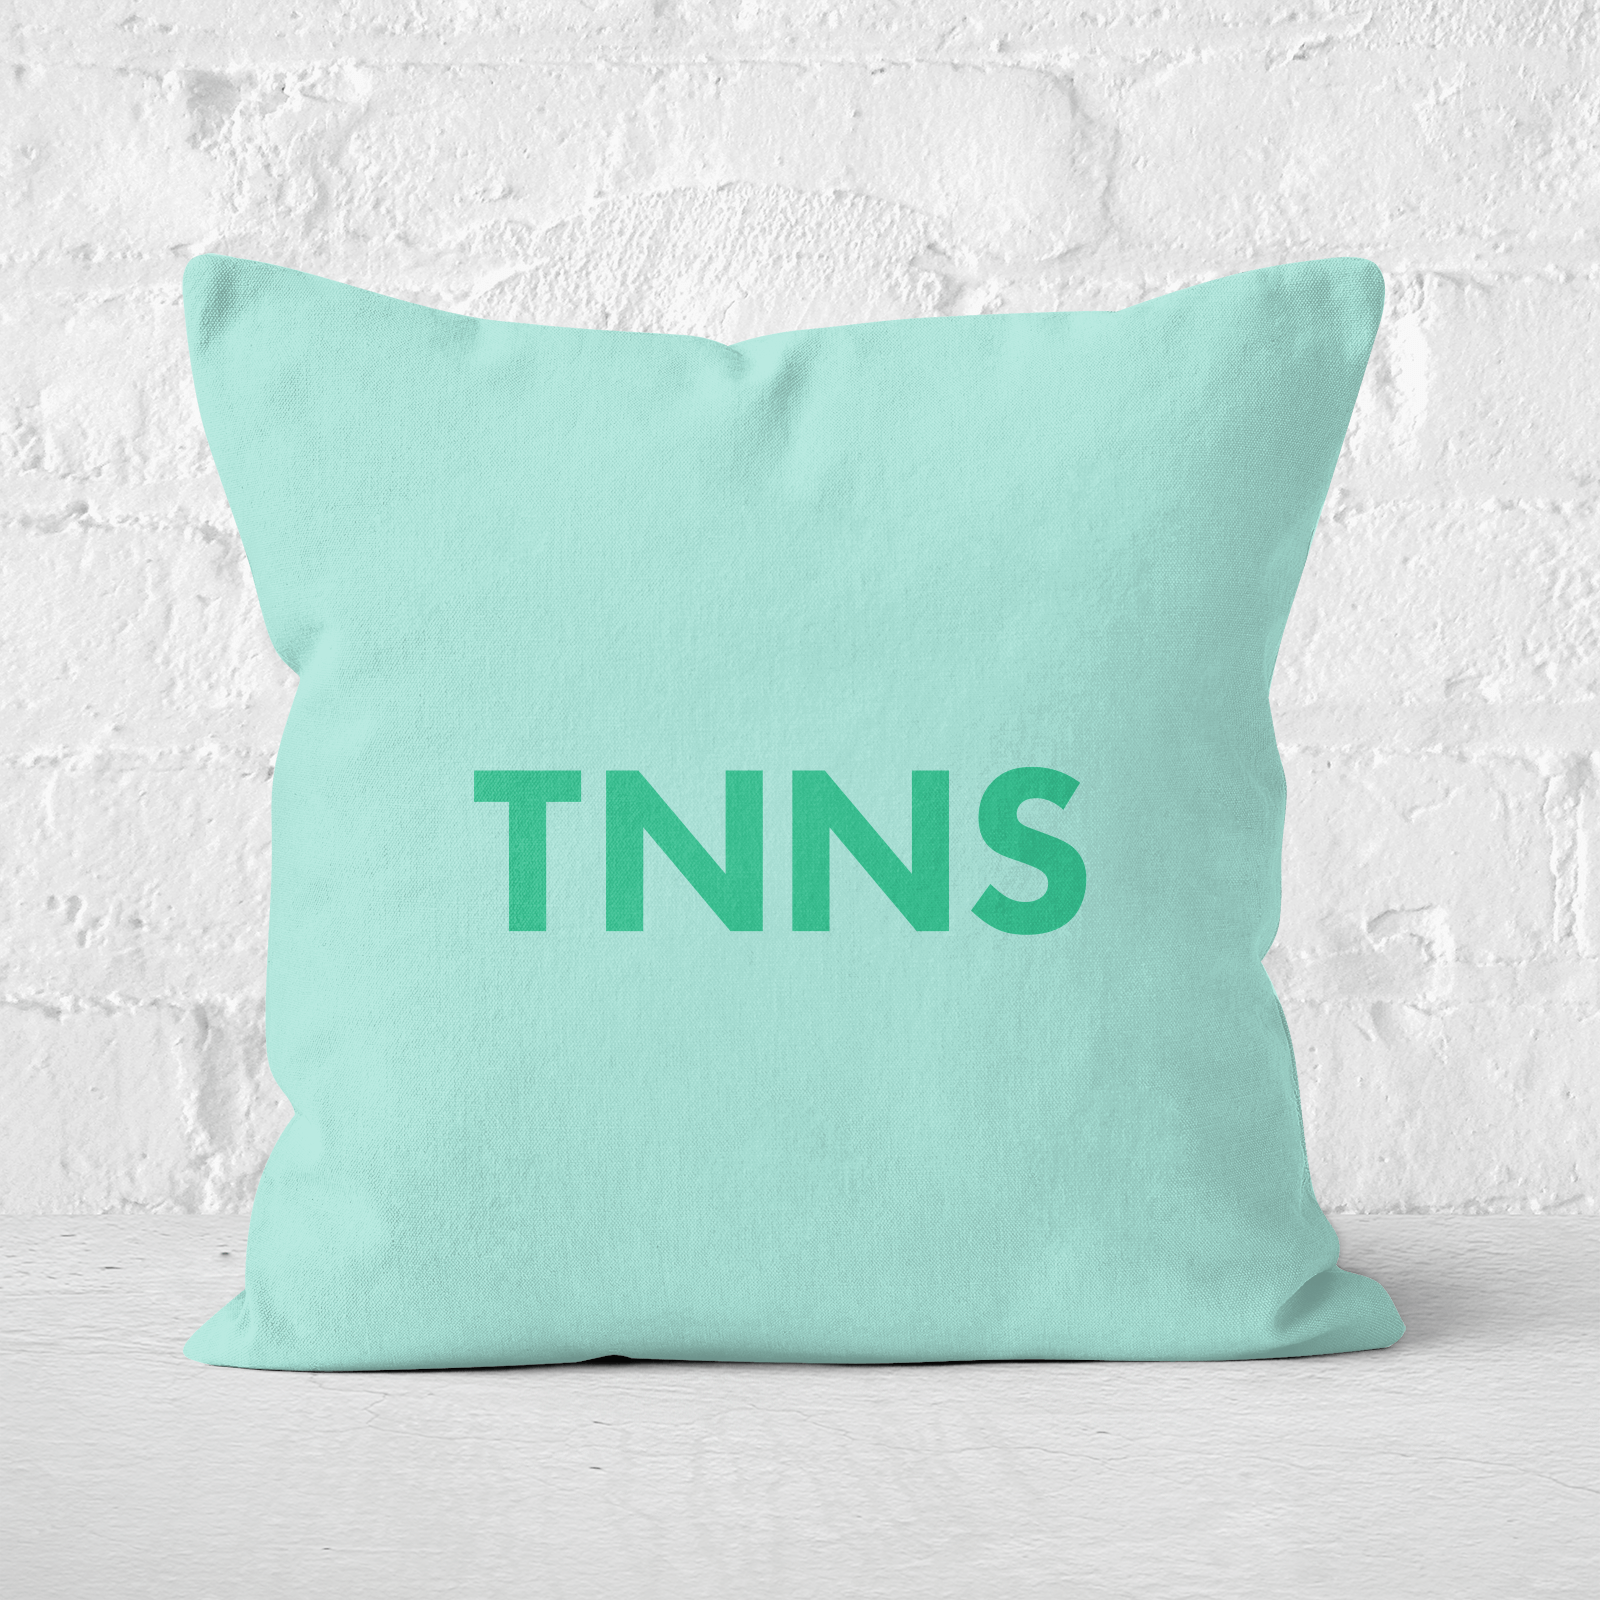 Tnns Square Cushion   50x50cm   Soft Touch